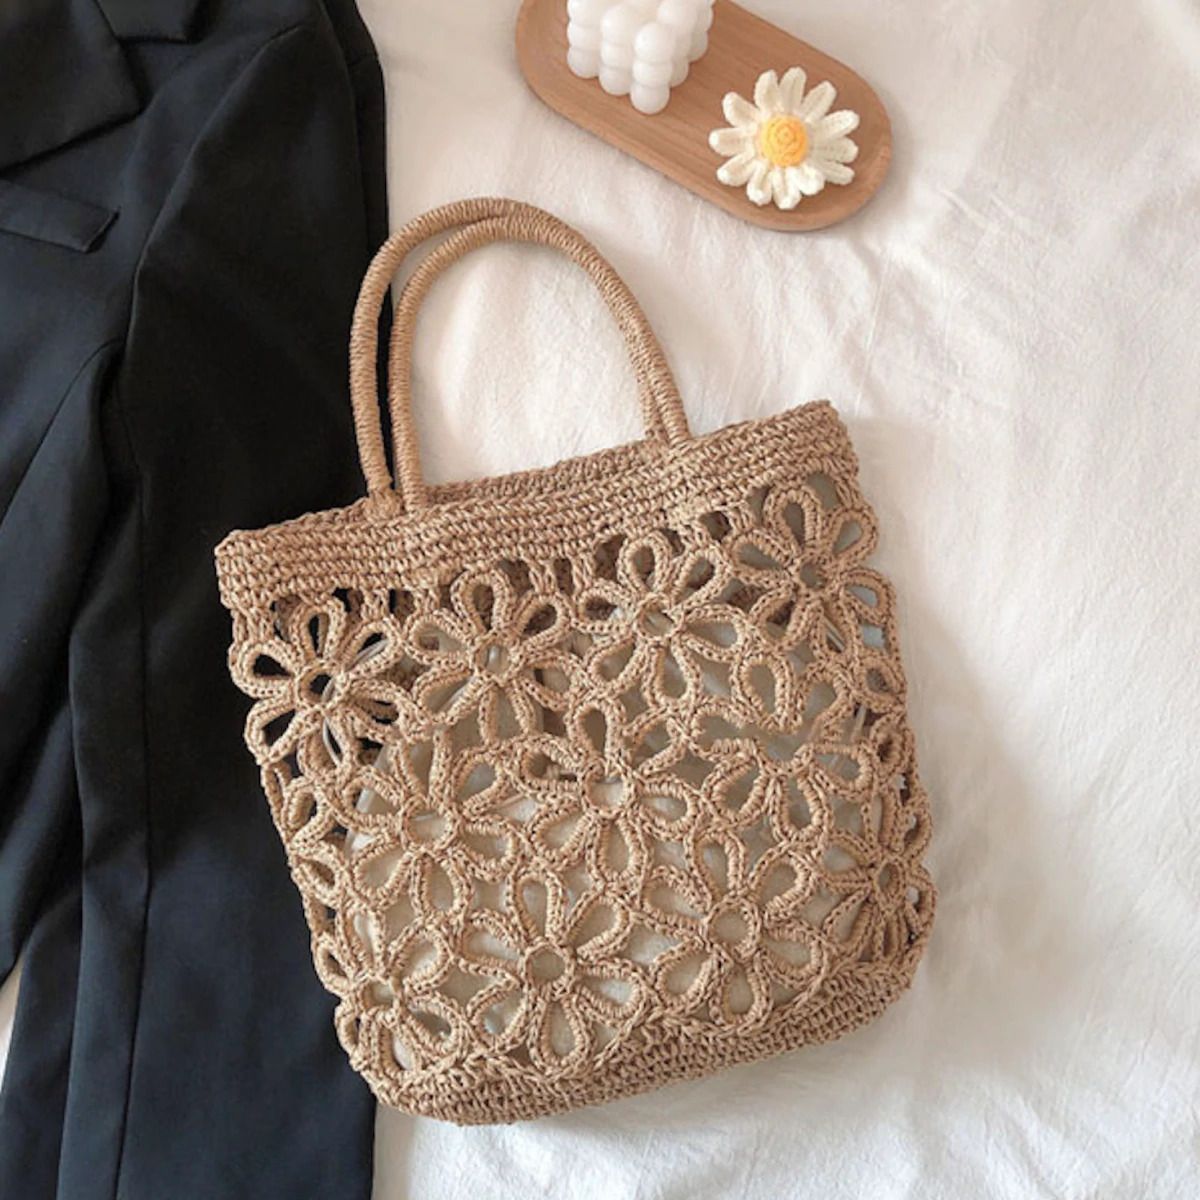 Artisanal Elegance: Exploring Handmade Bags Types